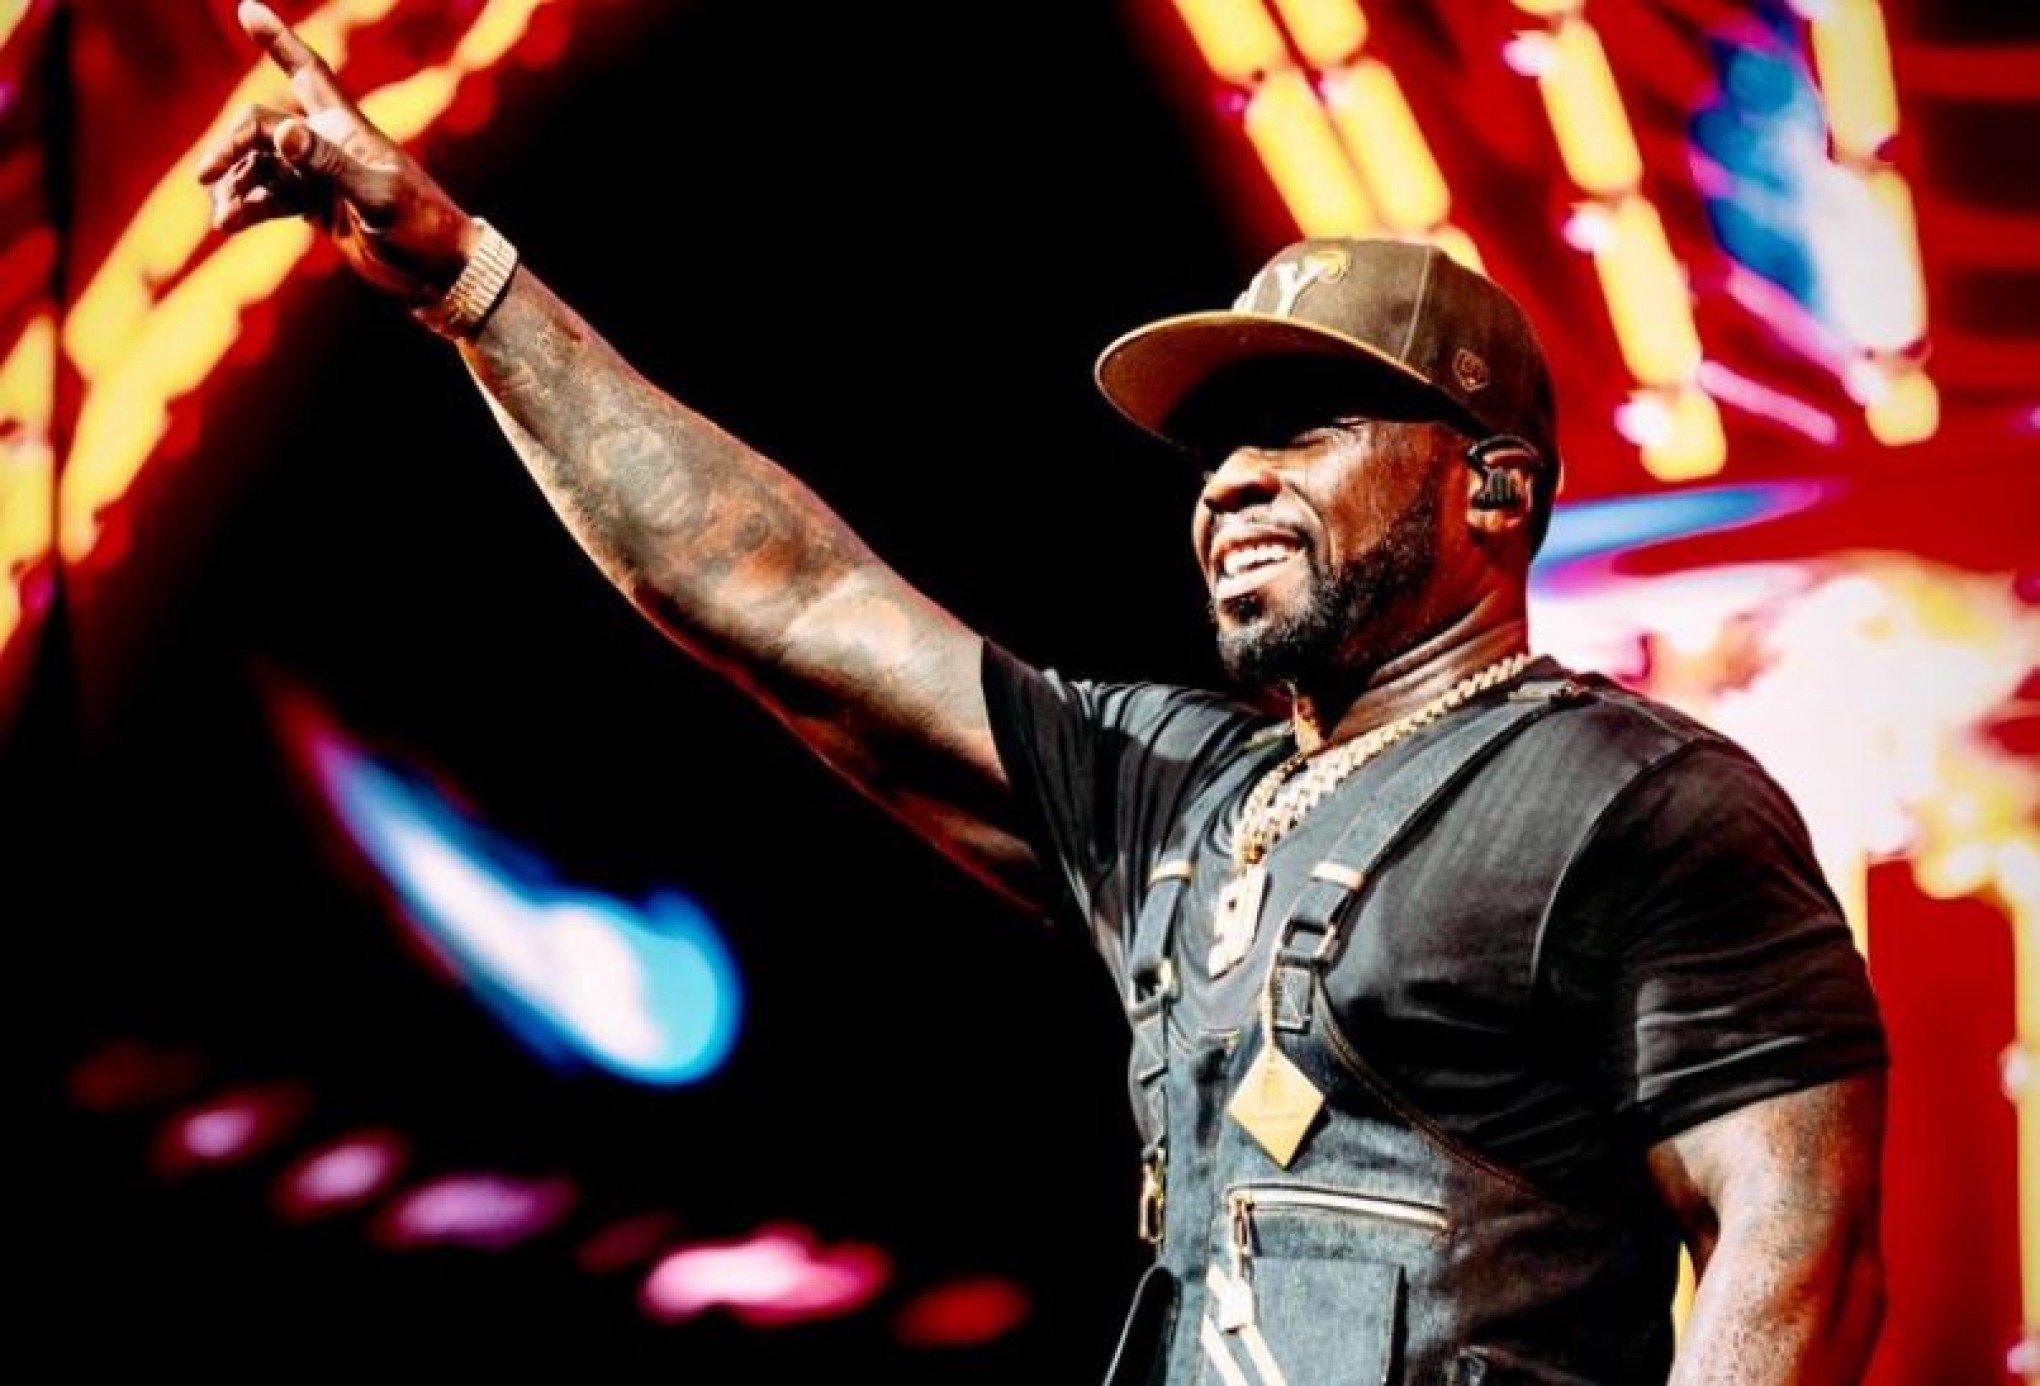 Vídeo: 50 Cent arremessa microfone e acerta apresentadora